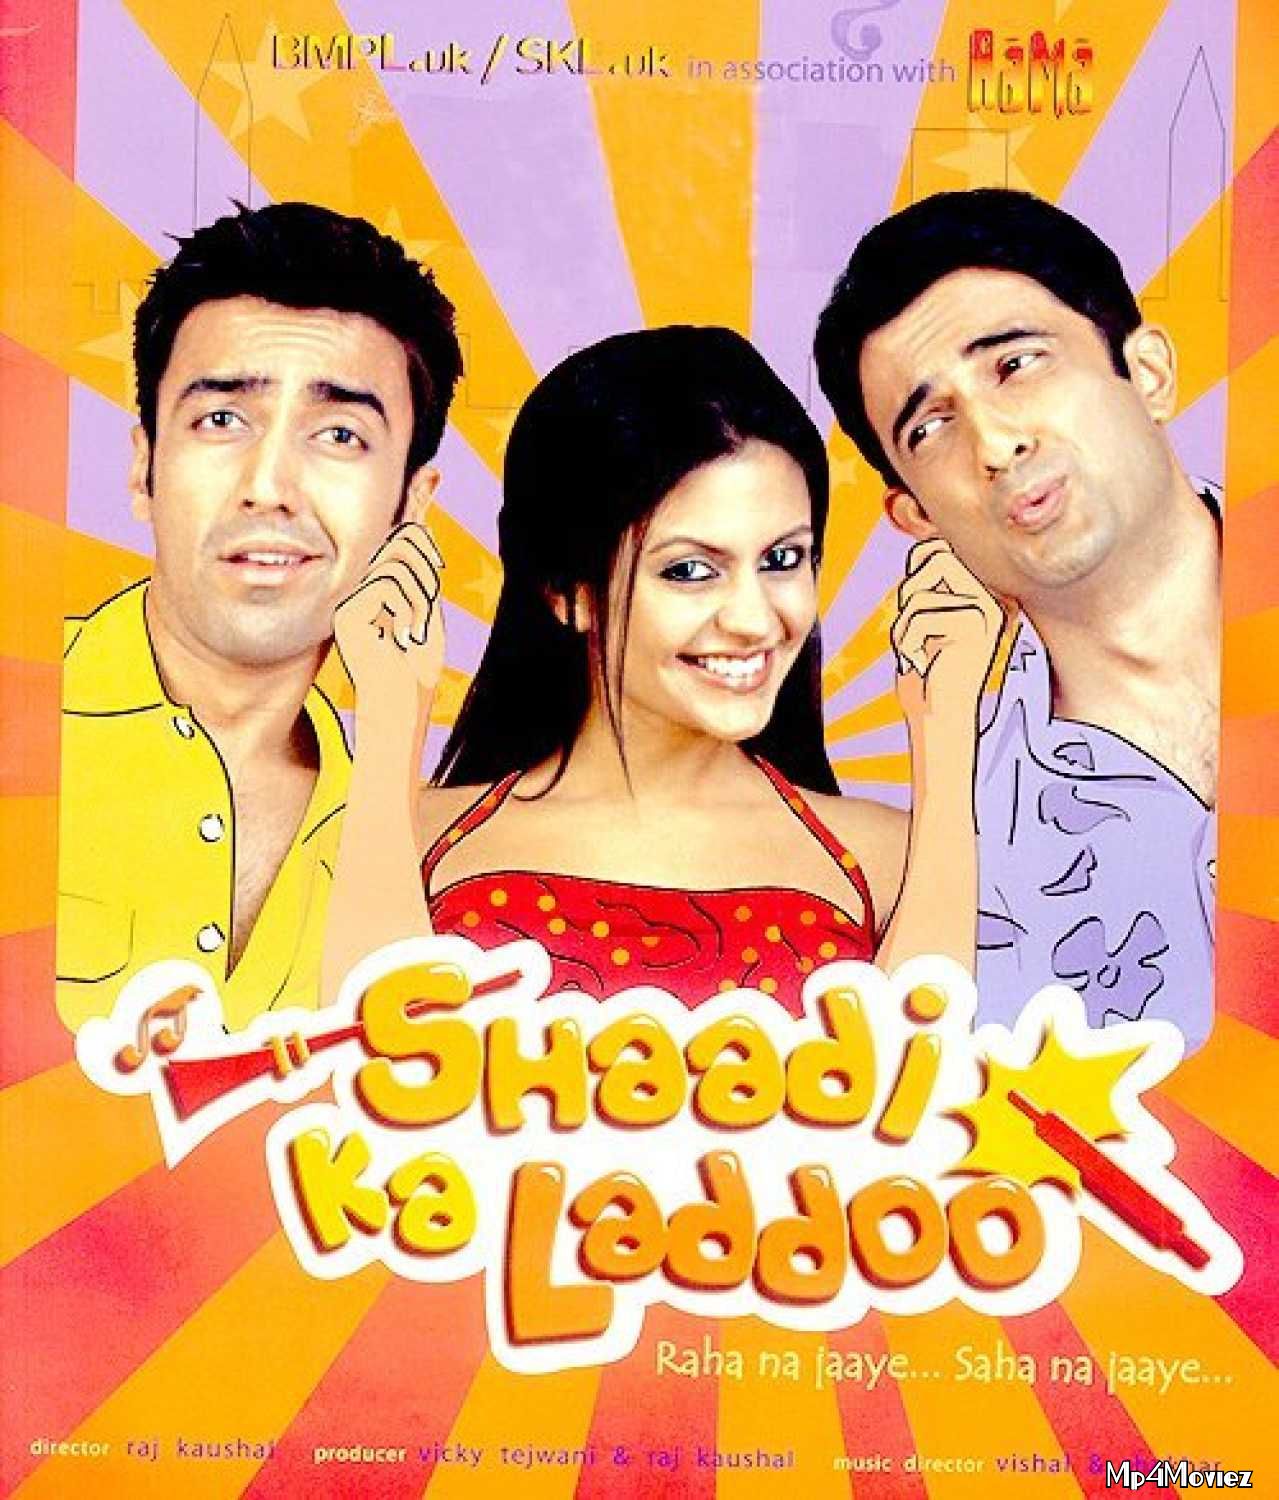 Shaadi Ka Laddoo (2004) Hindi Movie HDRip download full movie